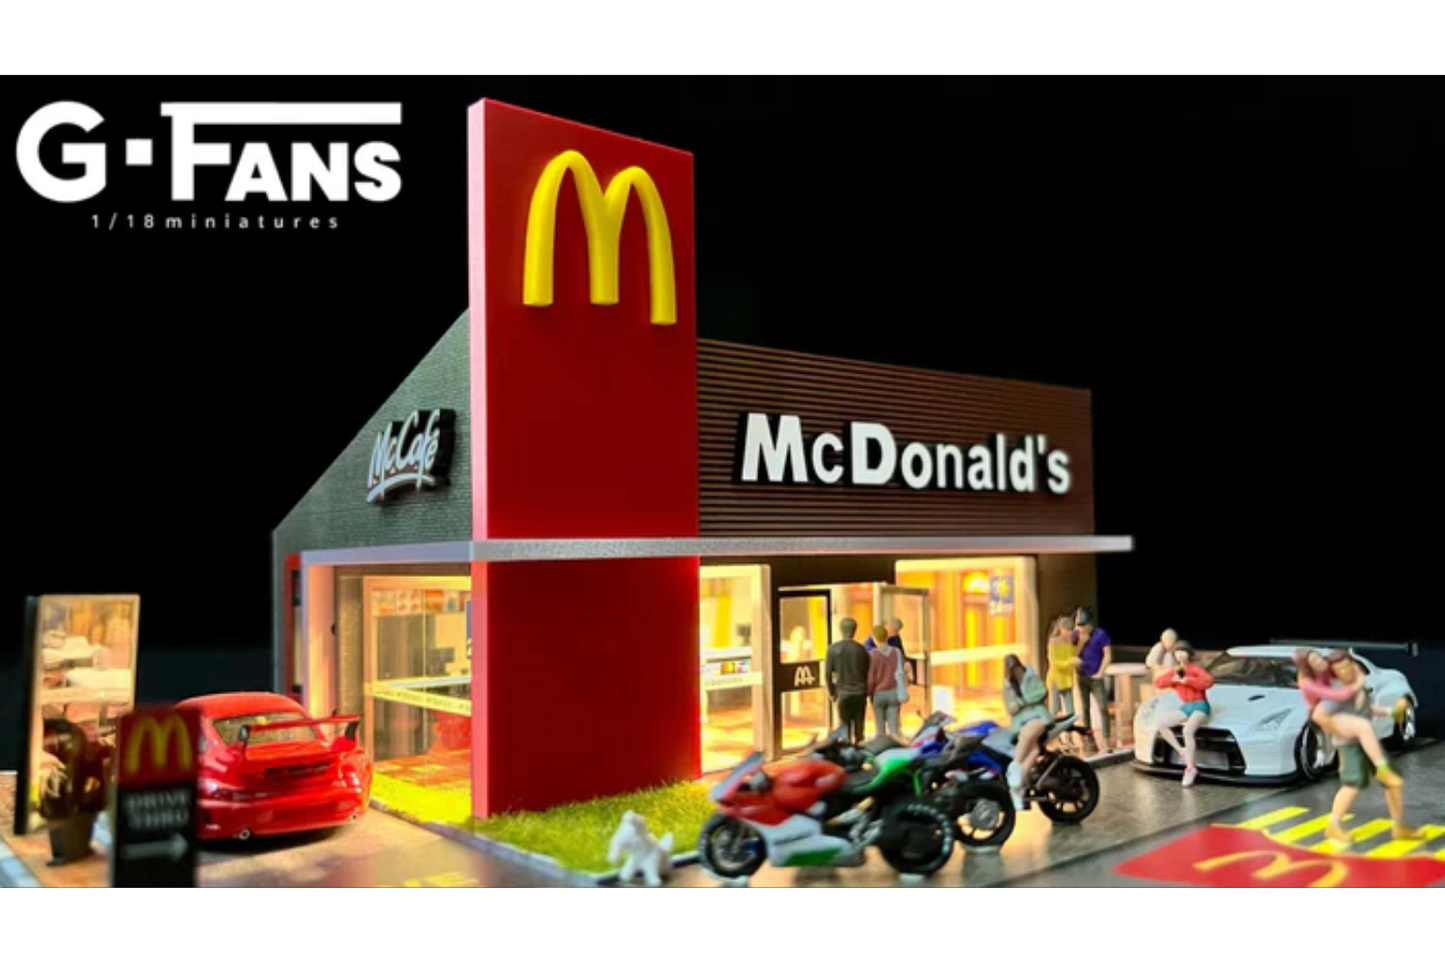 G-Fans 1/64 Scale Illuminated Mcdonalds Diorama